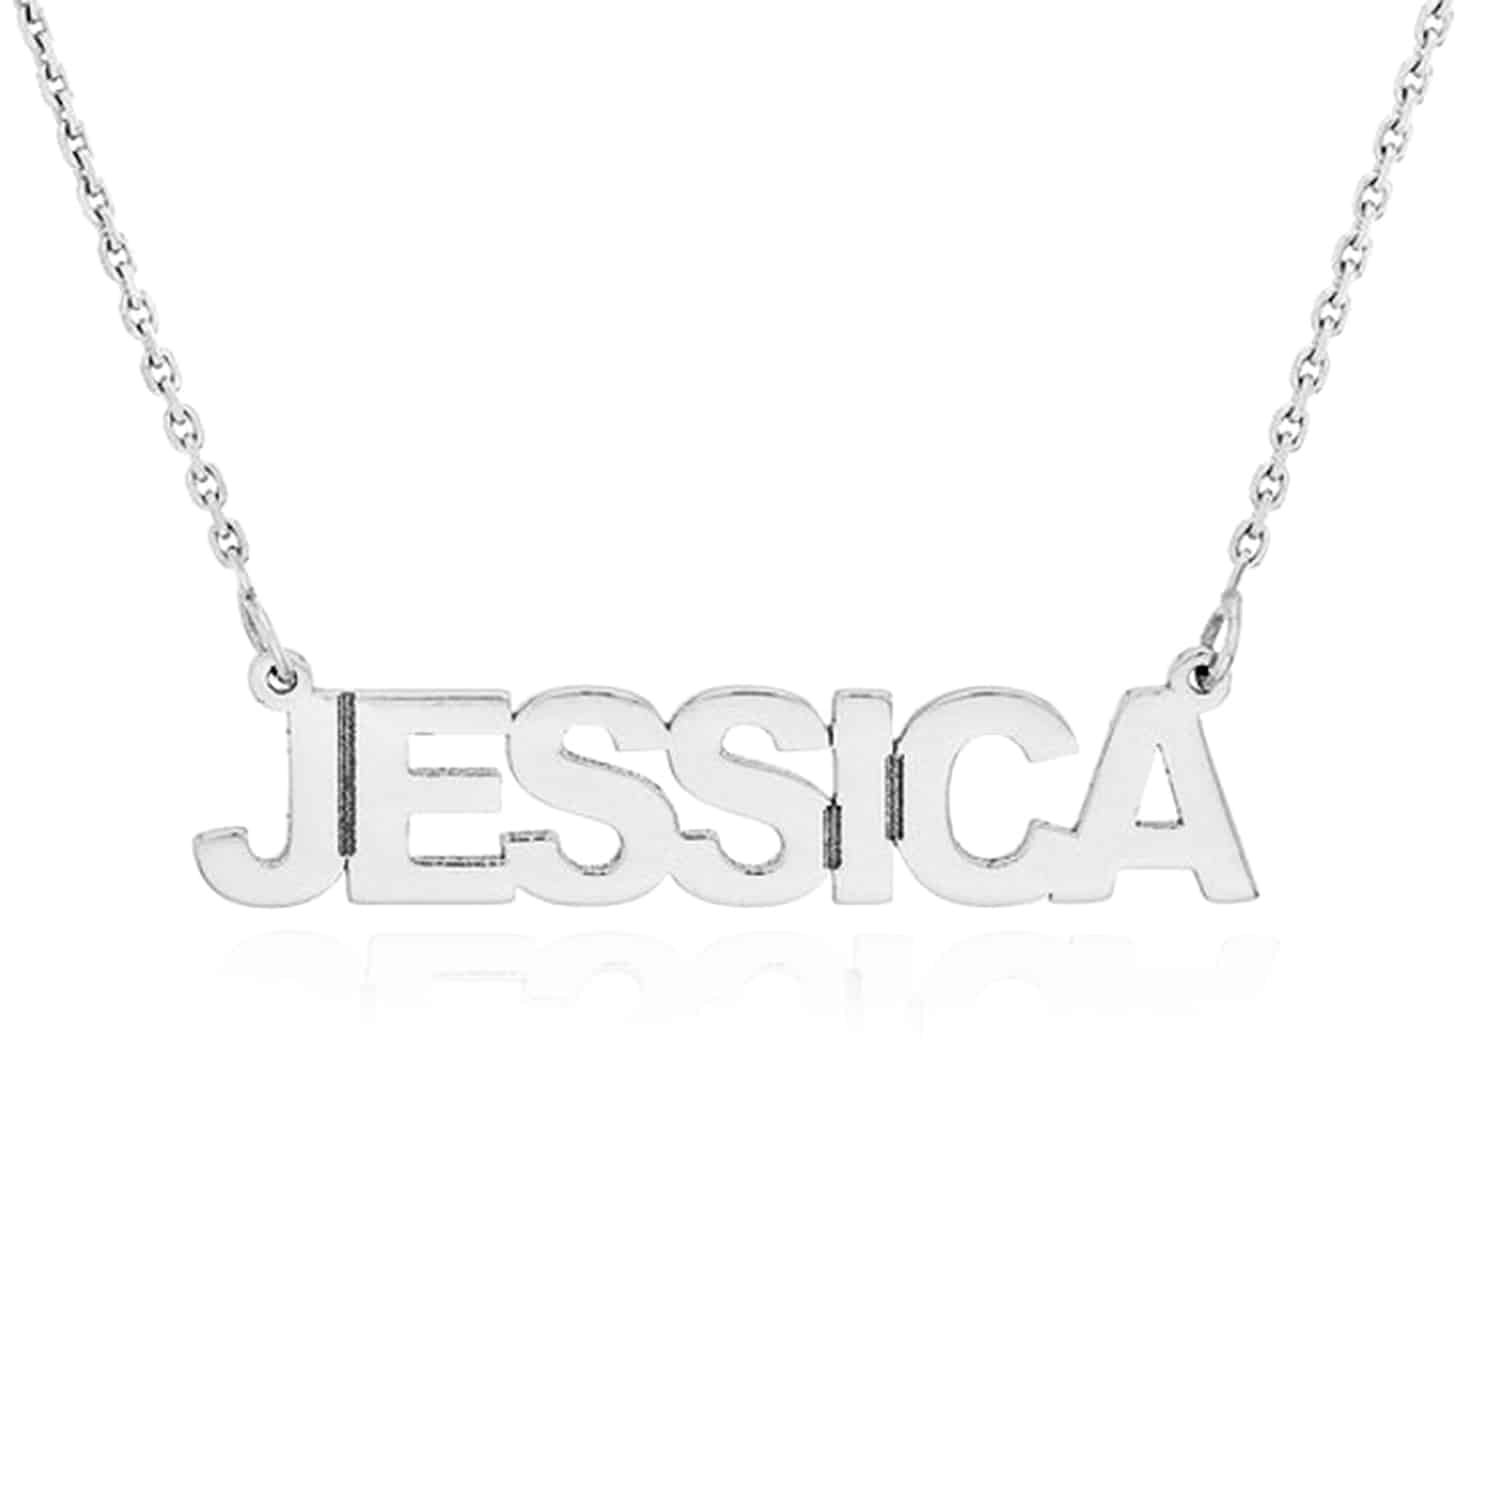 Customizable 14K Gold Yellow White Rose Block Style Nameplate Pendant Necklace - White Gold, 16"-18" Adjustable